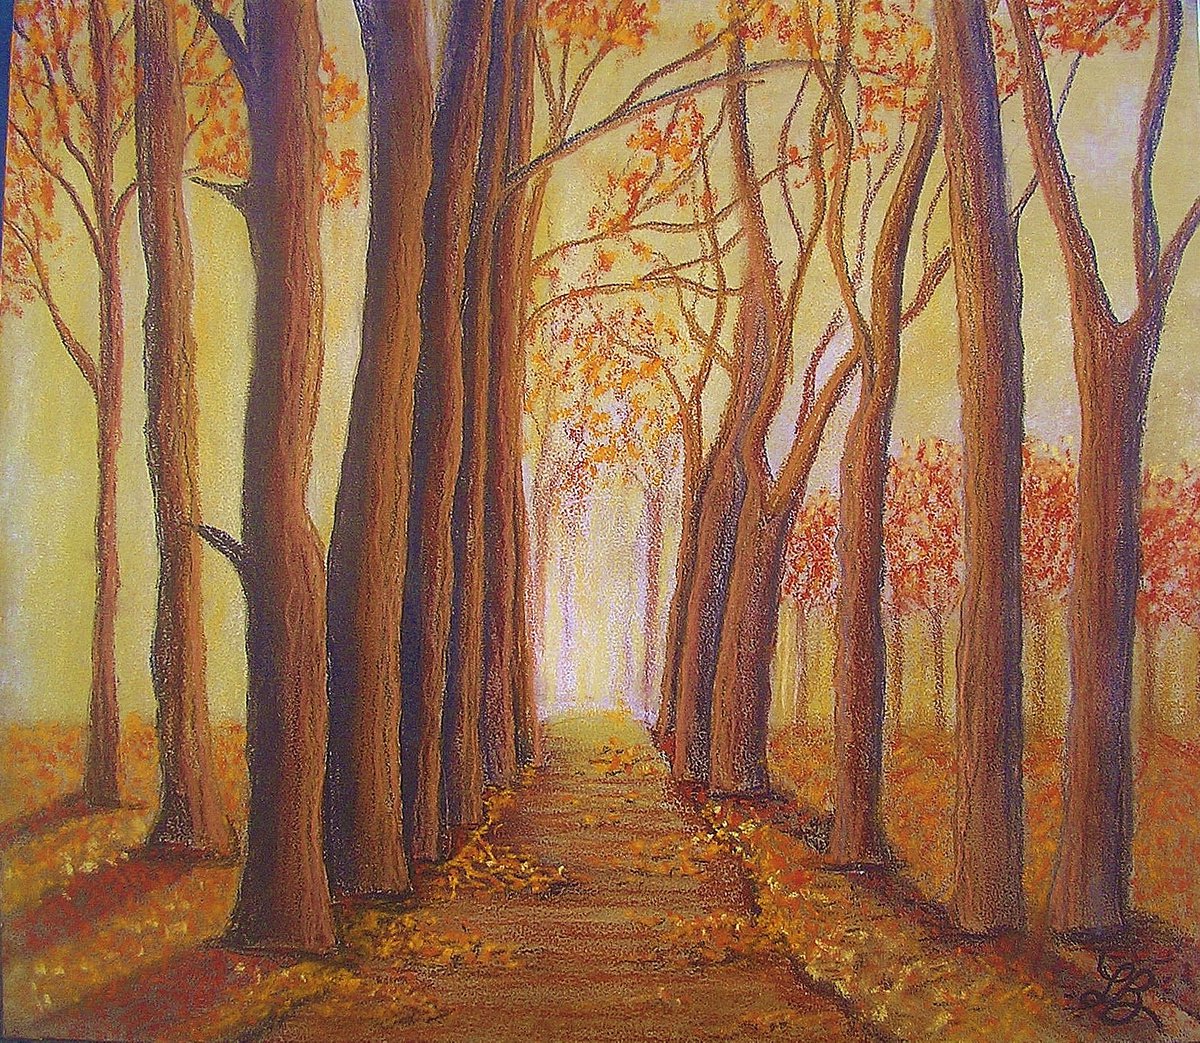 Sunny Path in Autumn by Linda Burnett